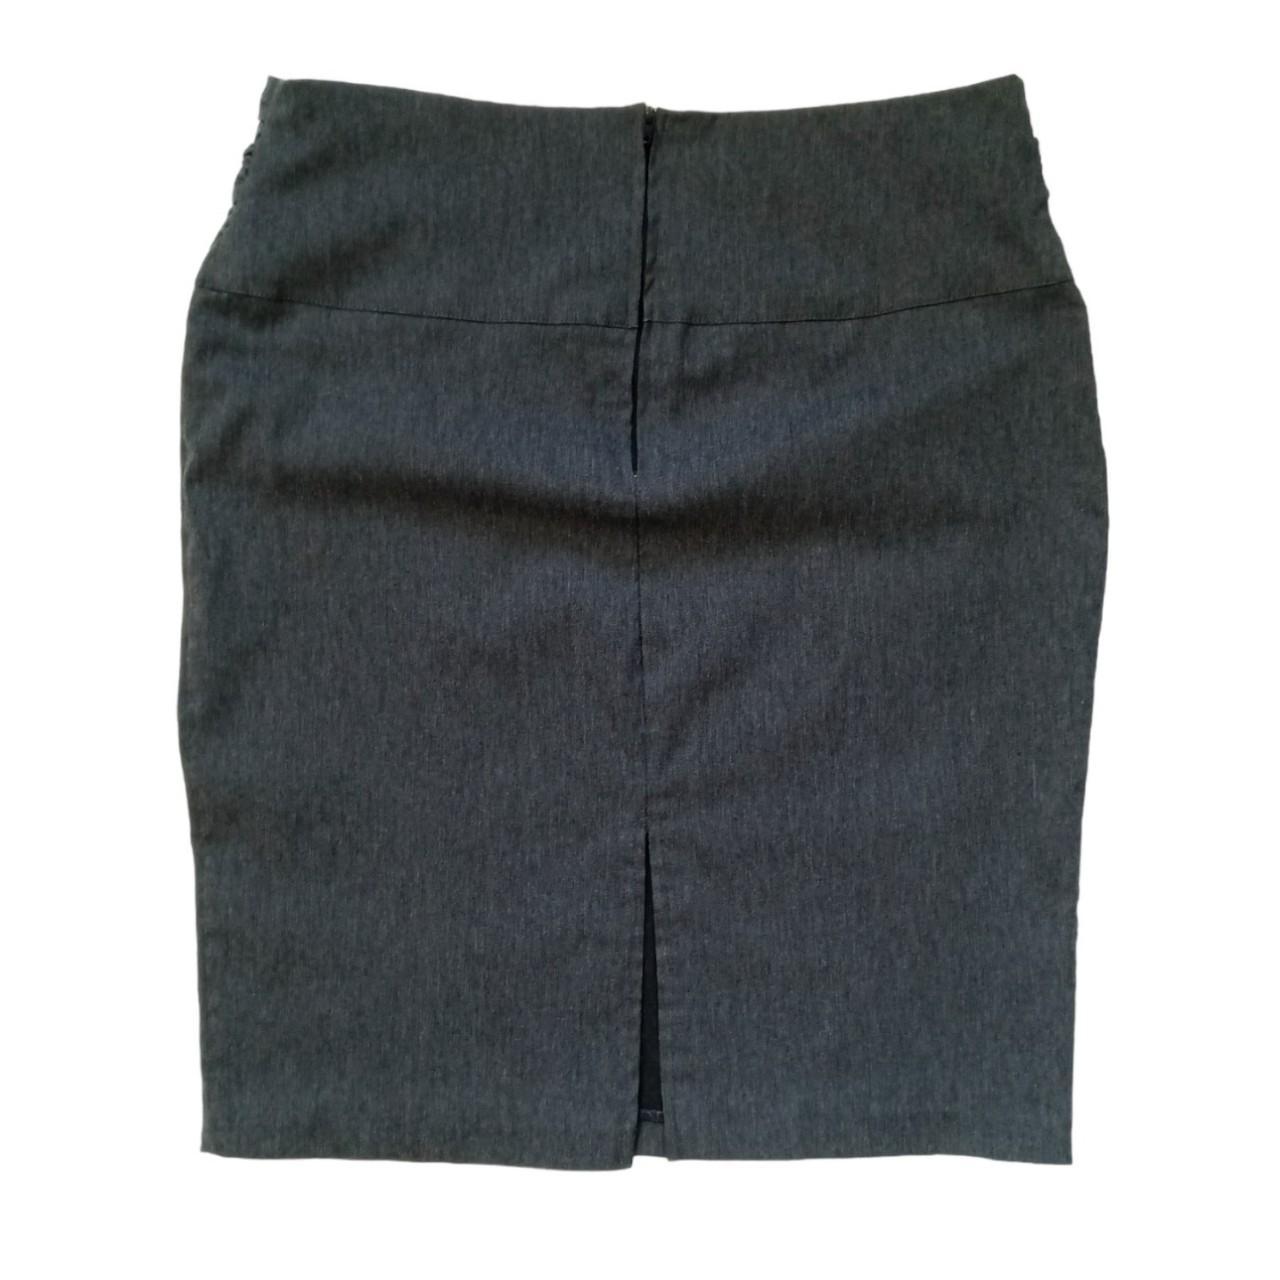 Sensational Skirt Y2K charcoal grey mini skirt with... - Depop